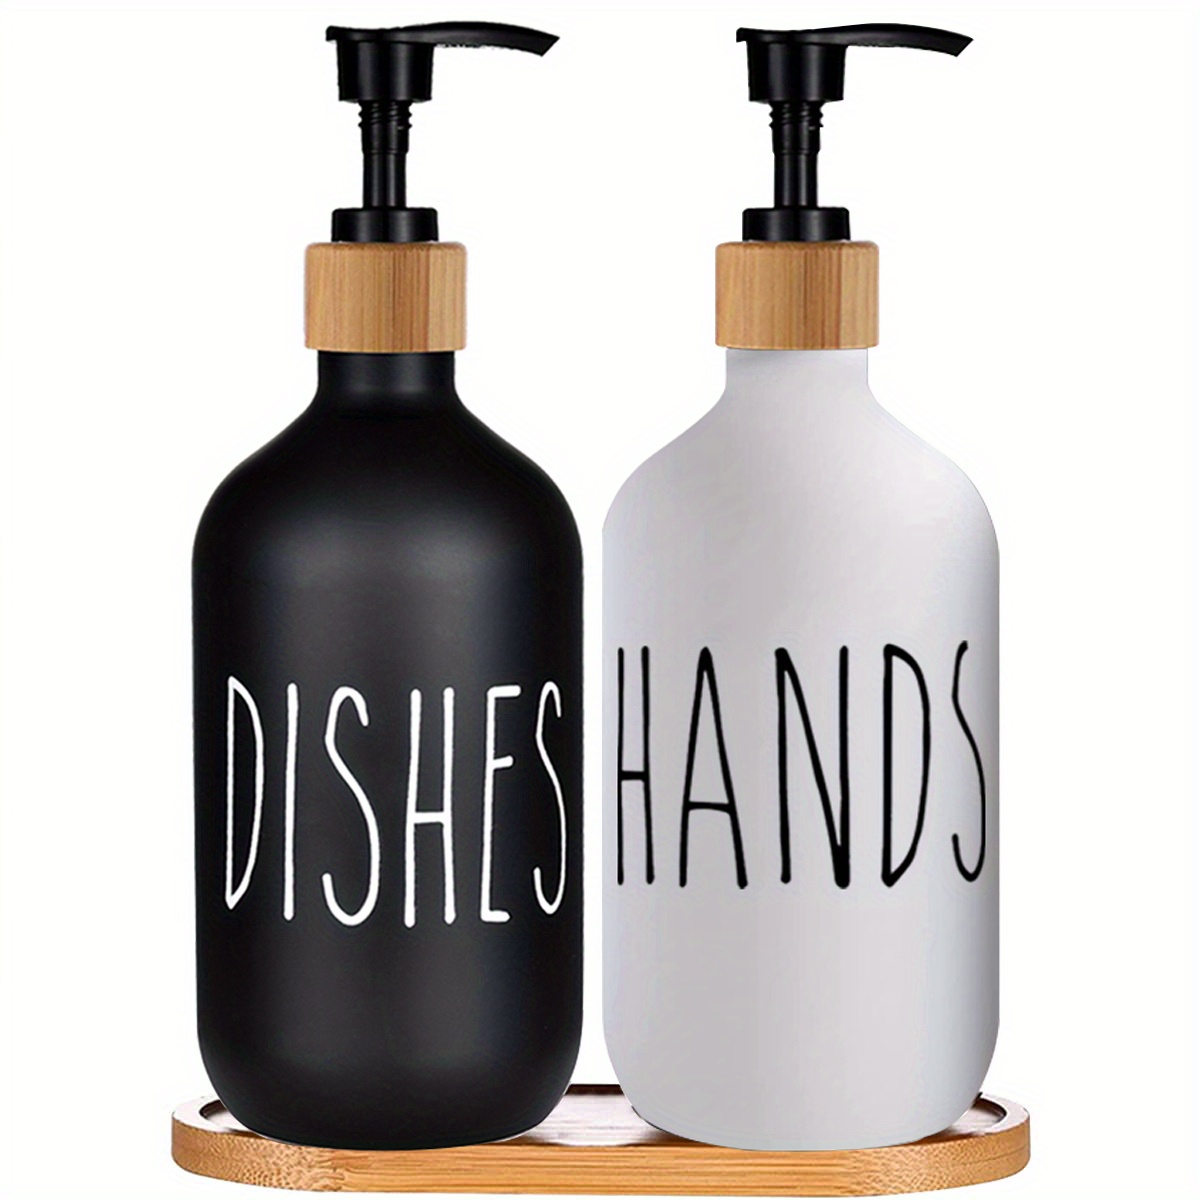 DISH SOAP DISPENSER WITH STORAGE - Black